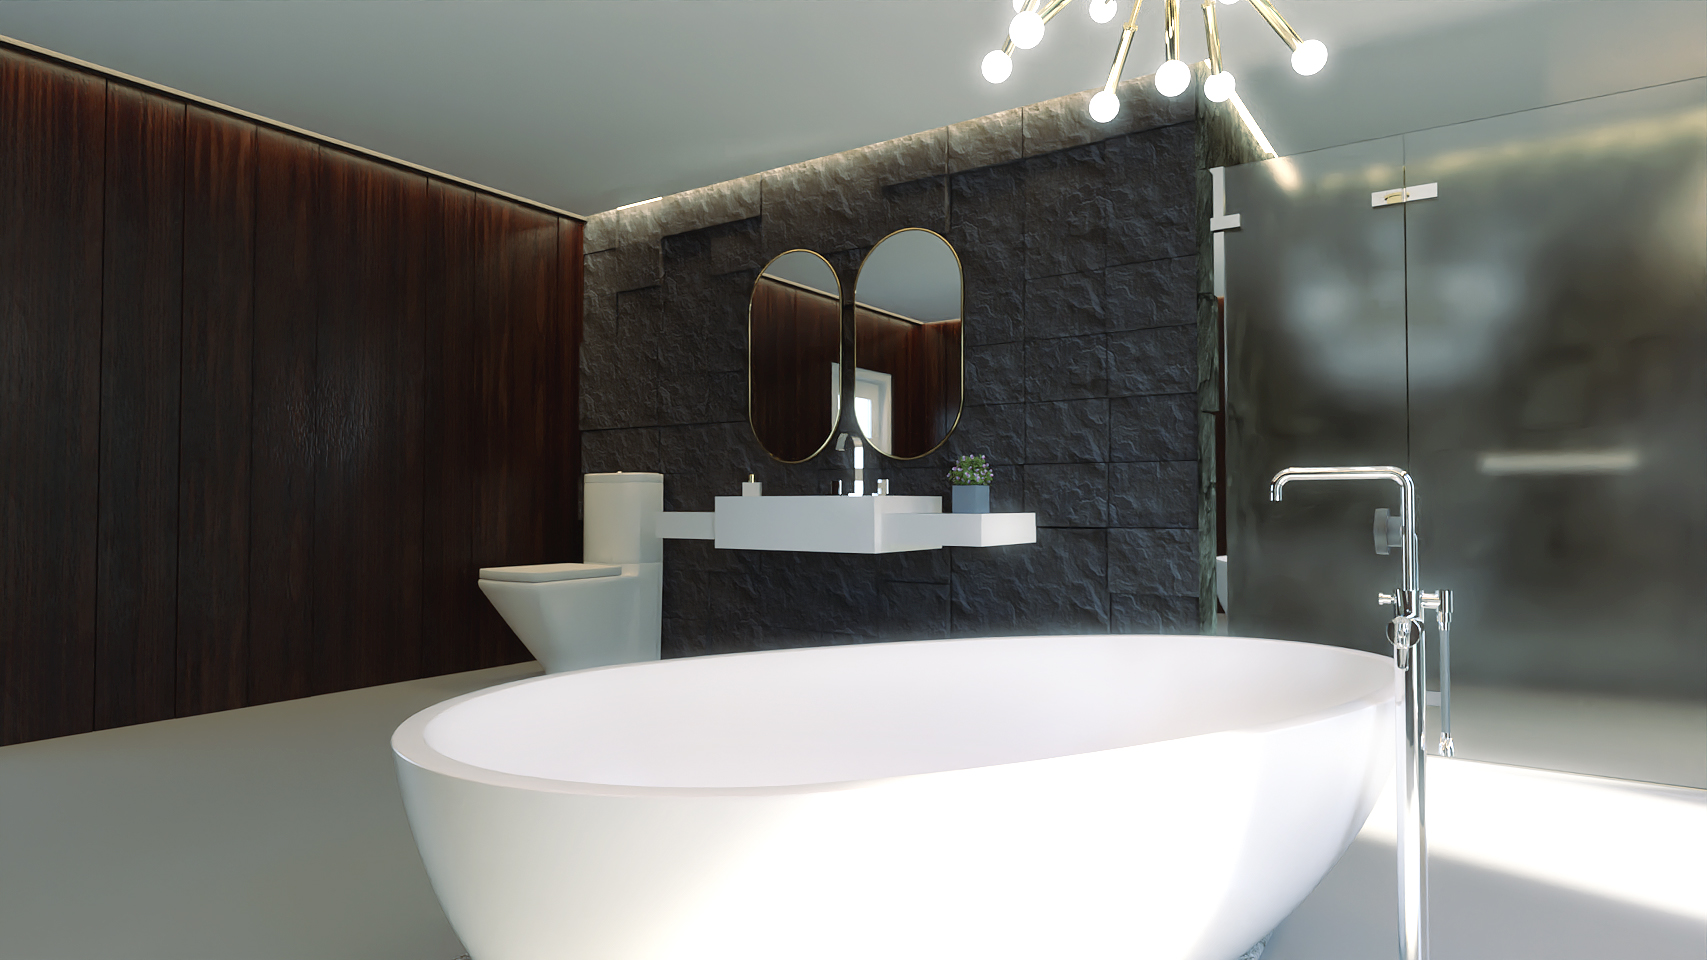 Modern Euro Bathroom by: kubramatic, 3D Models by Daz 3D